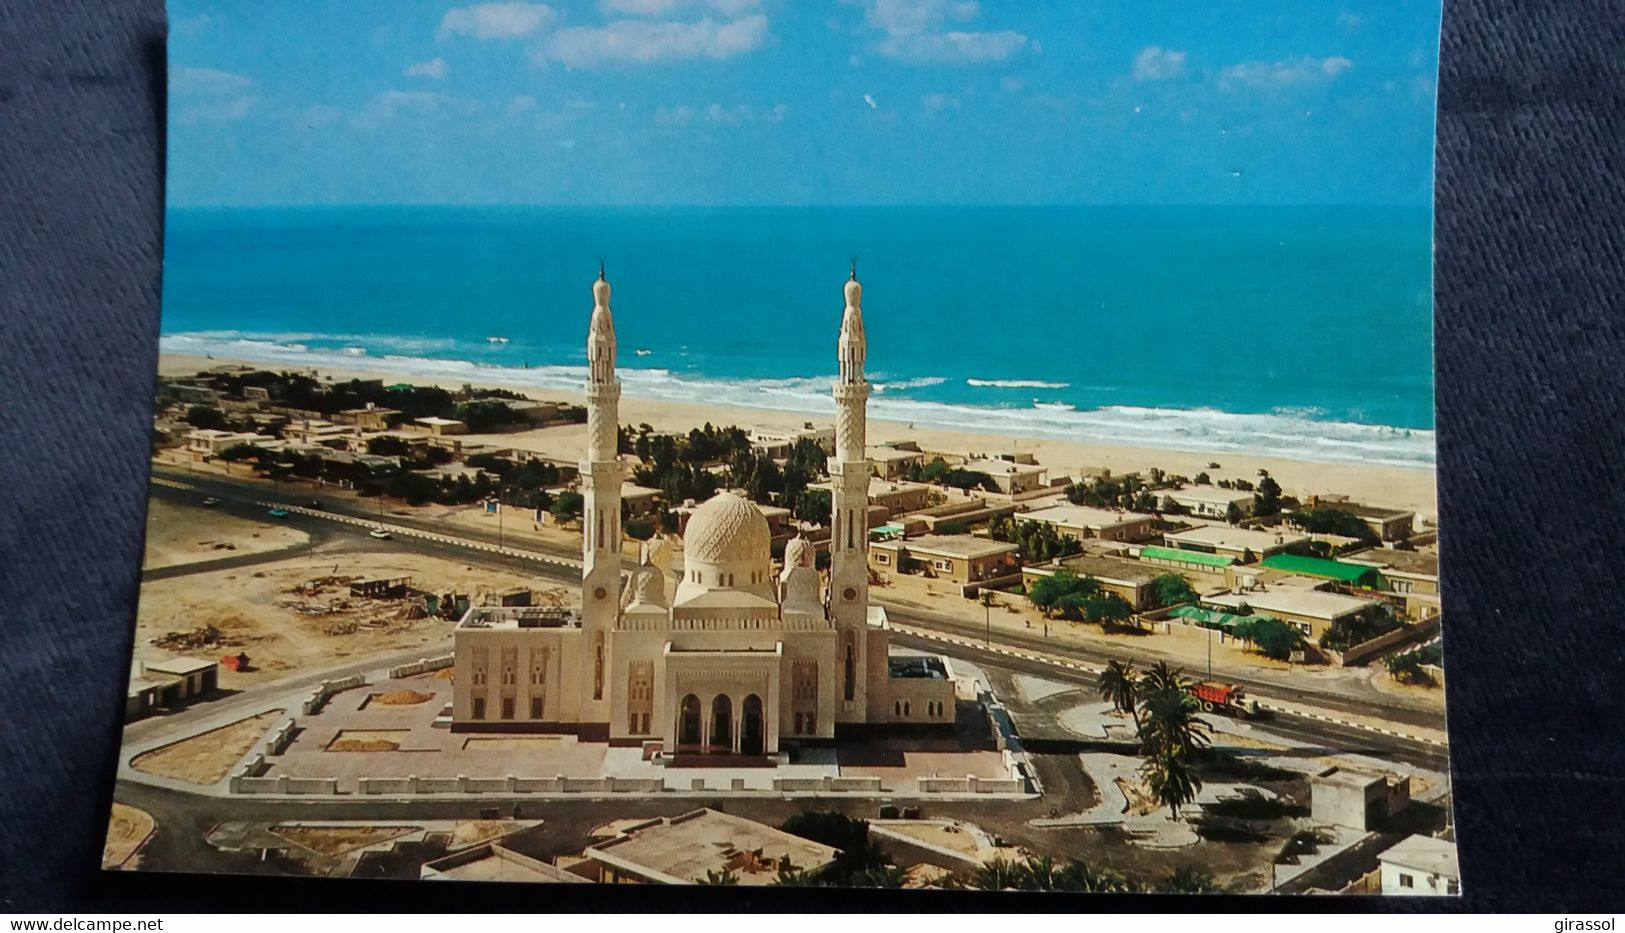 CPM DUBAI UAE MOSQUEE JUMAIRA  UNITED ARAB EMIRATES 1991 ED AWNI - United Arab Emirates